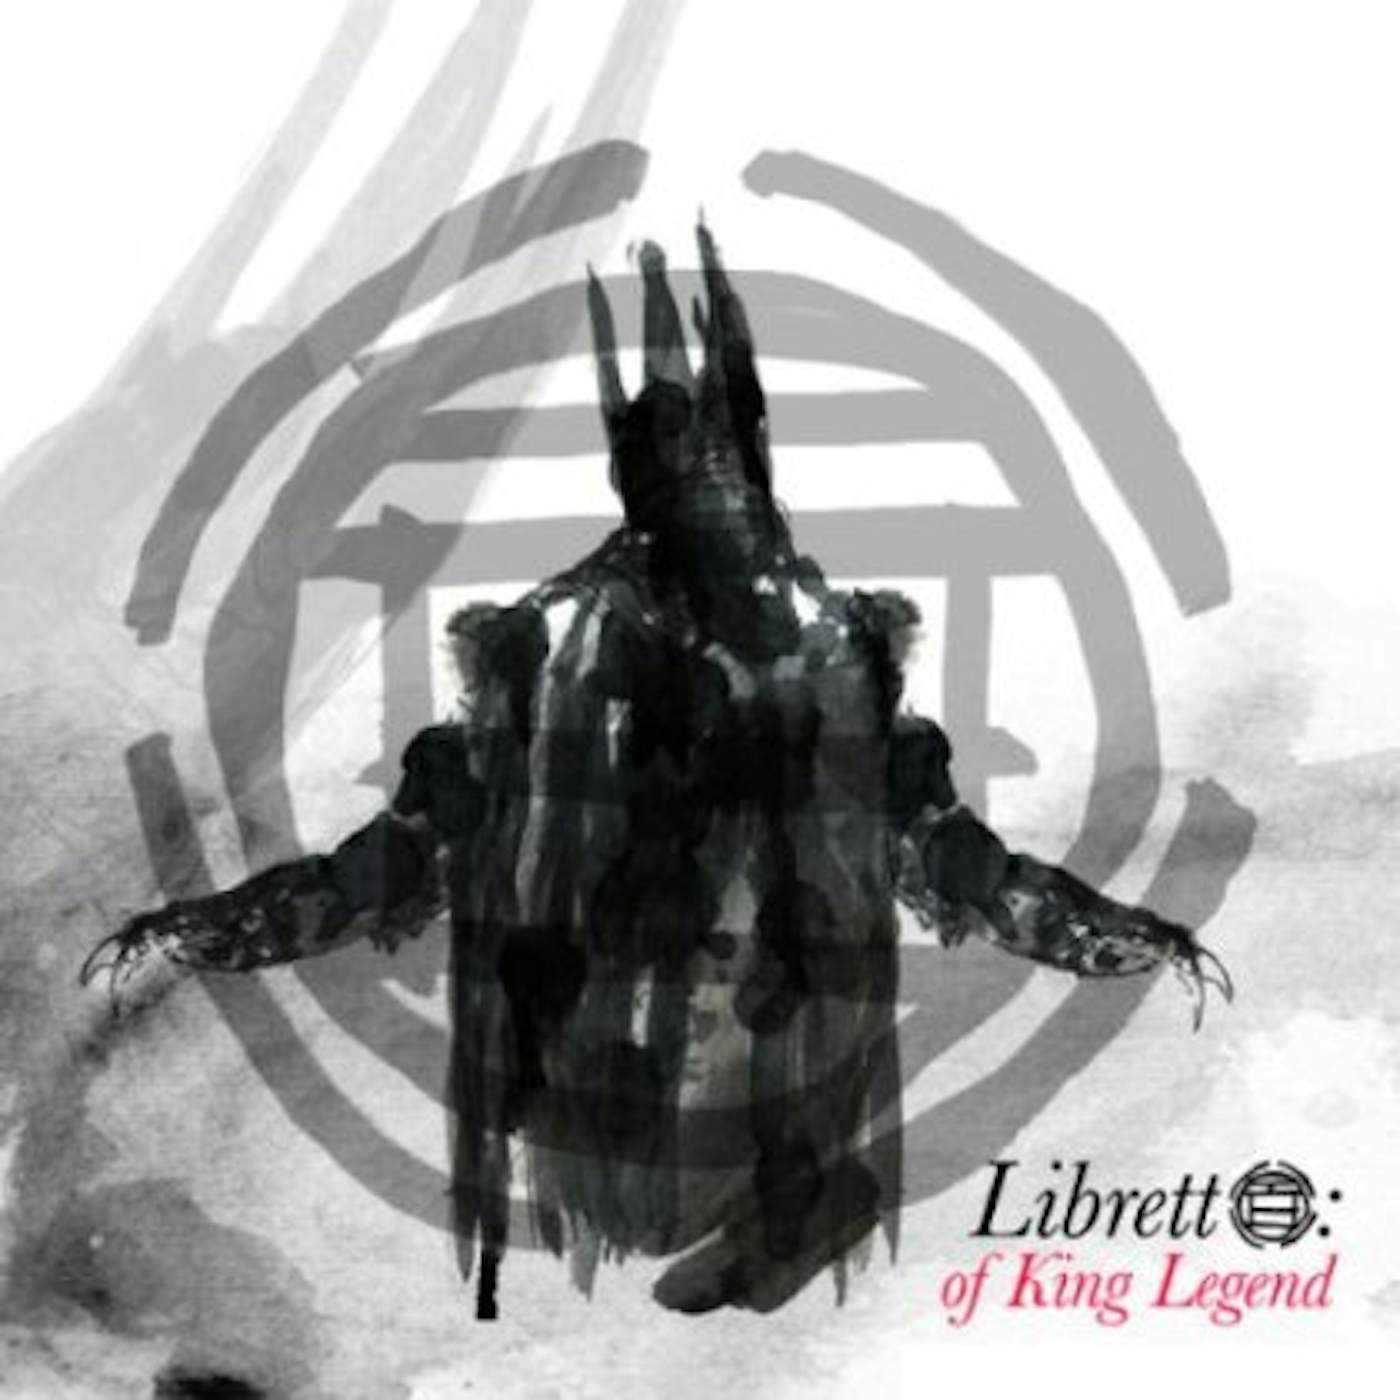 The Black Opera LIBRETTO: OF KING LEGEND CD